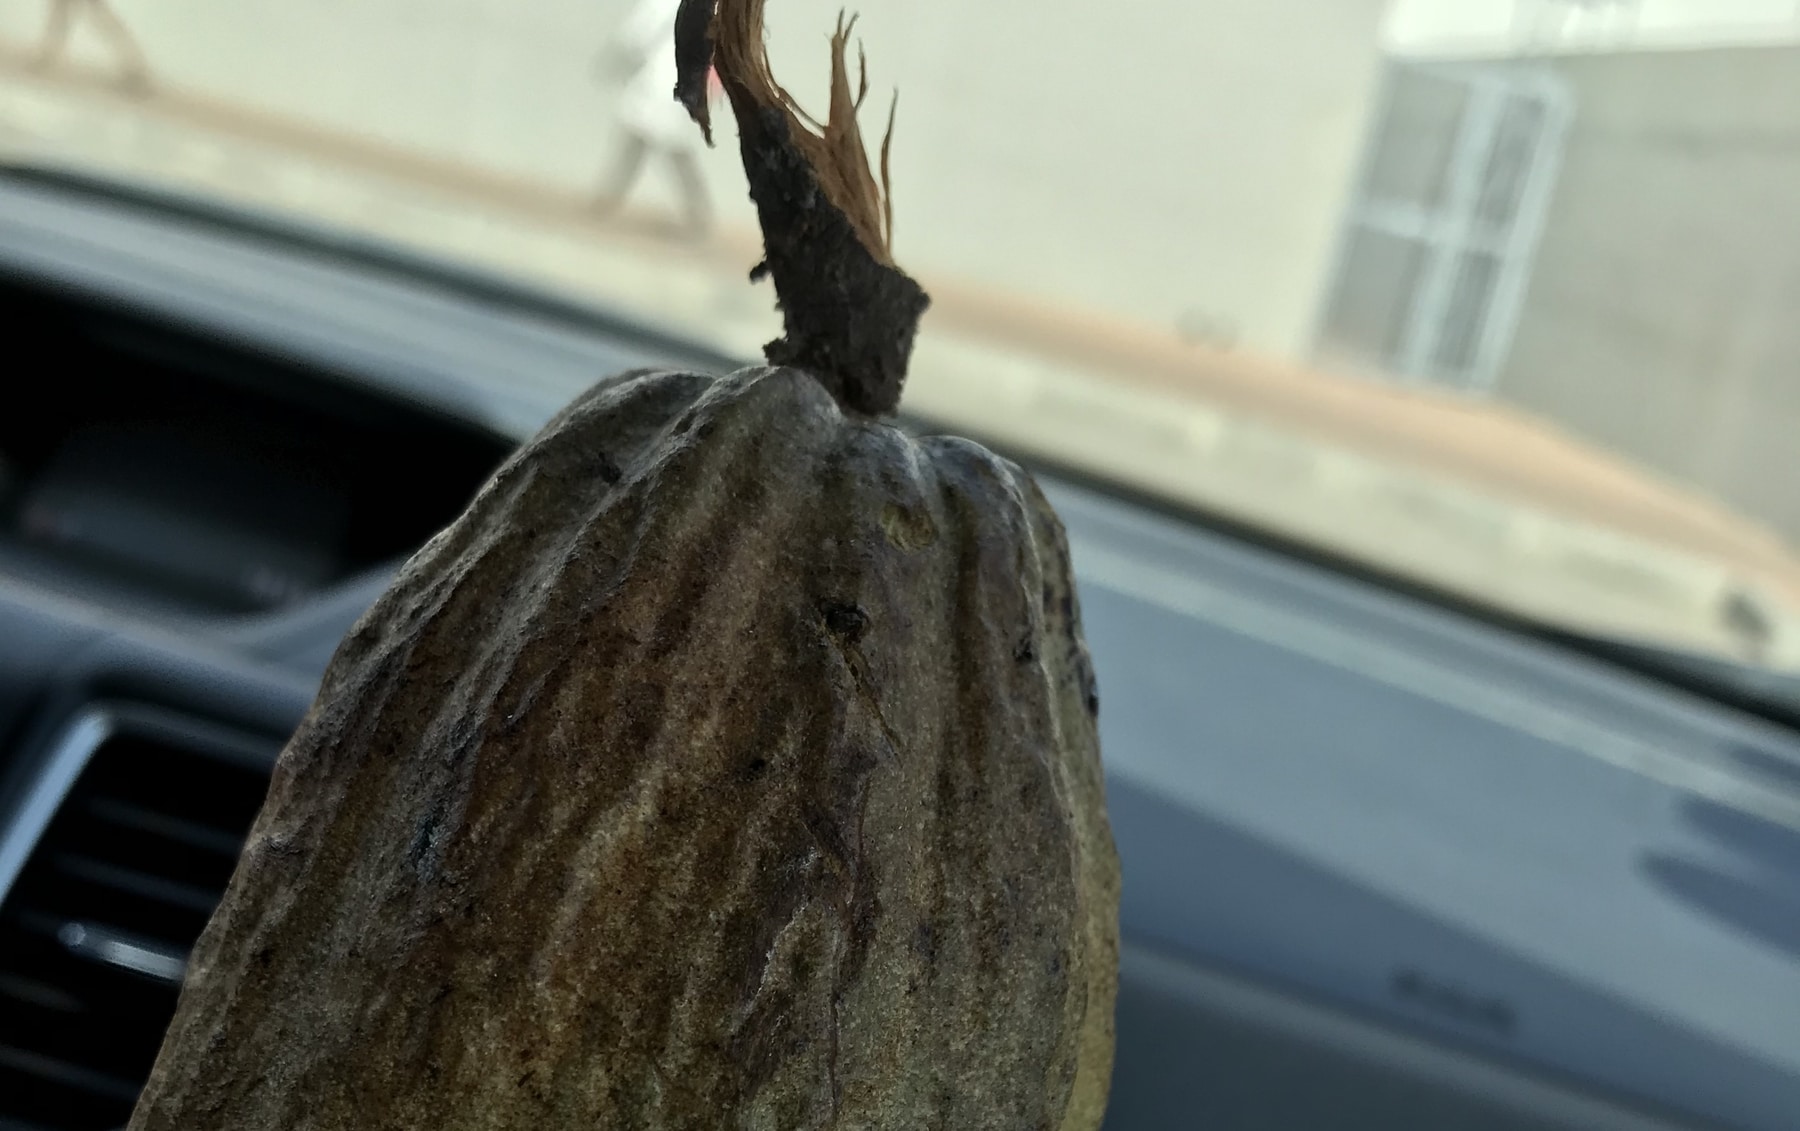 A Green cocoa pod in a car